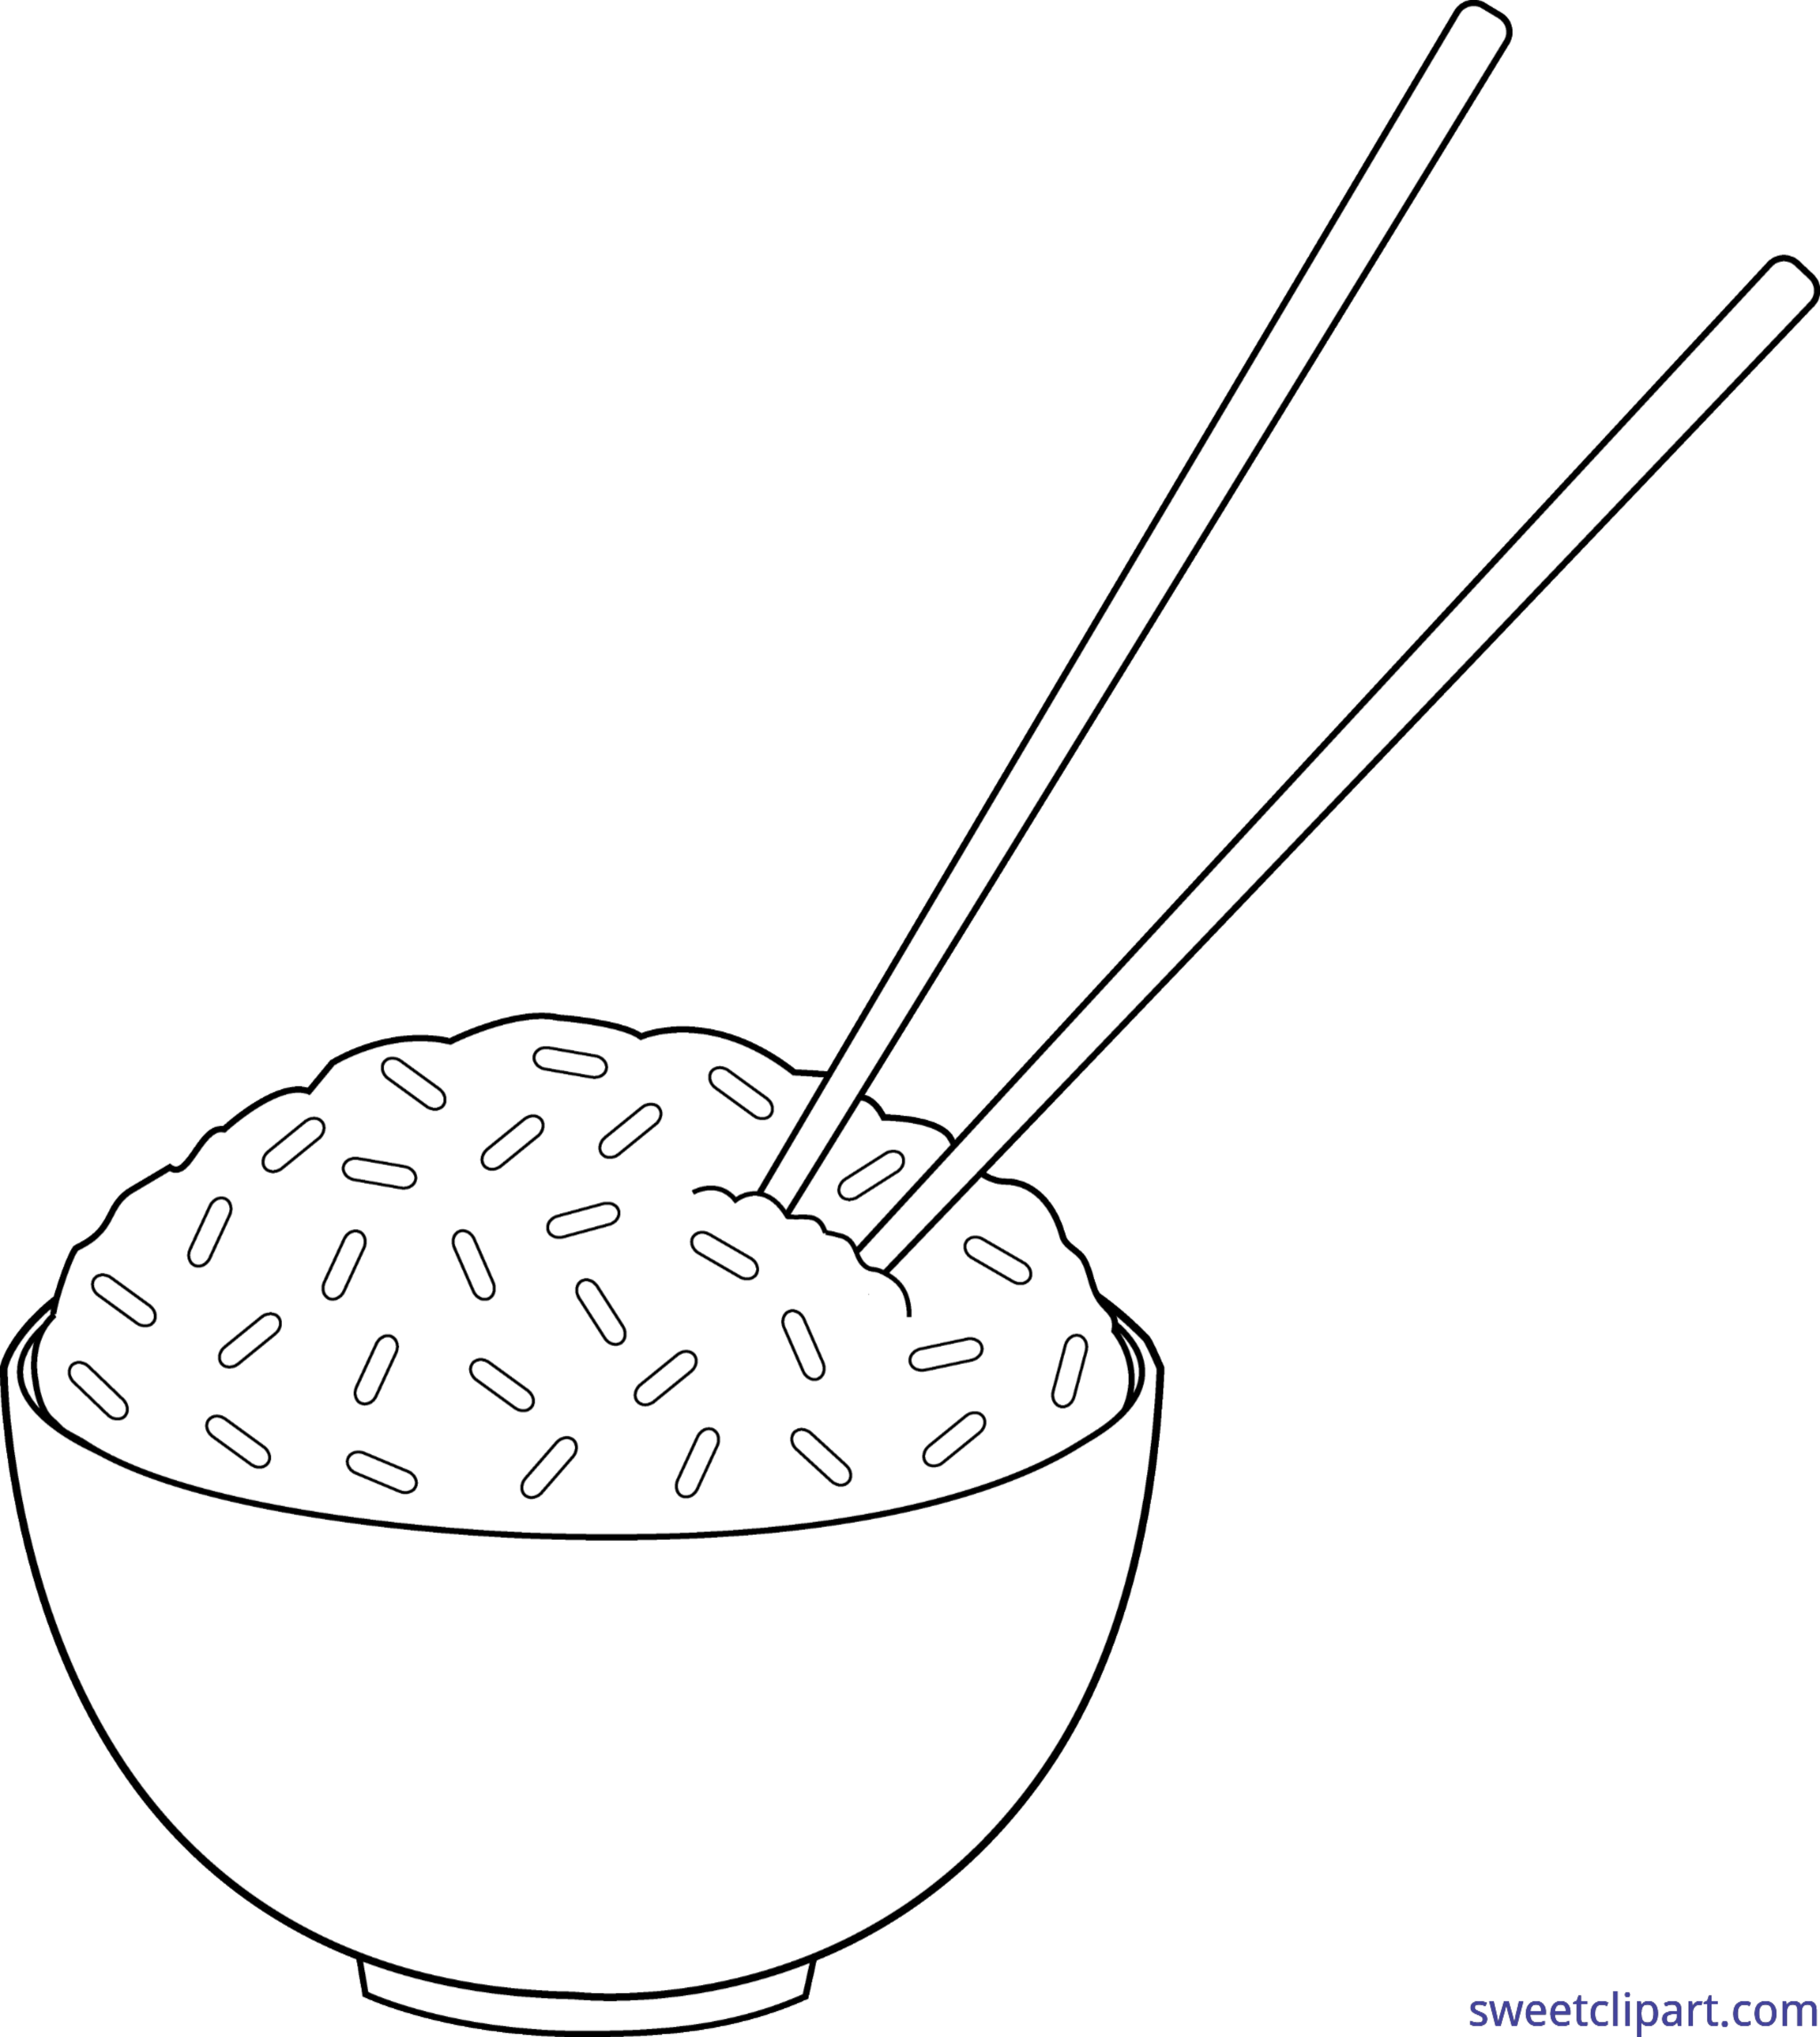 rice clipart chop sticks